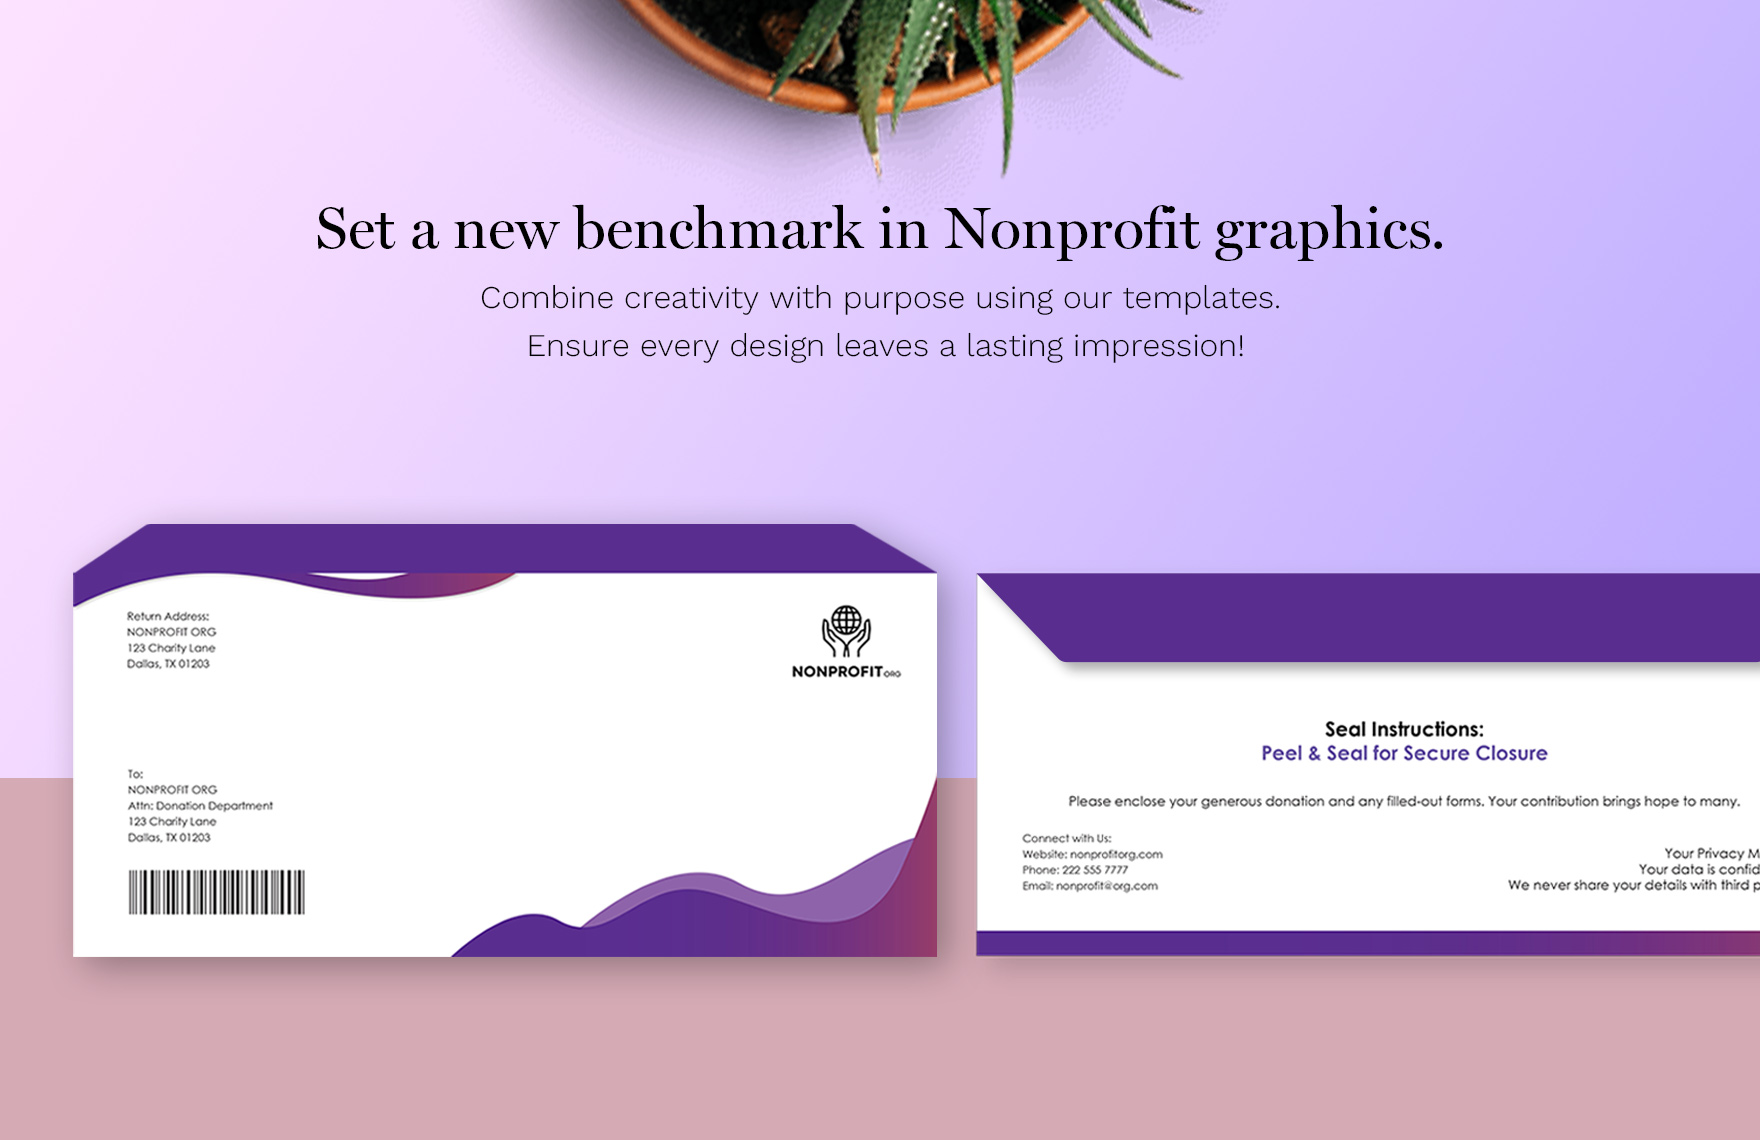 Nonprofit Organization Reply Envelope Template